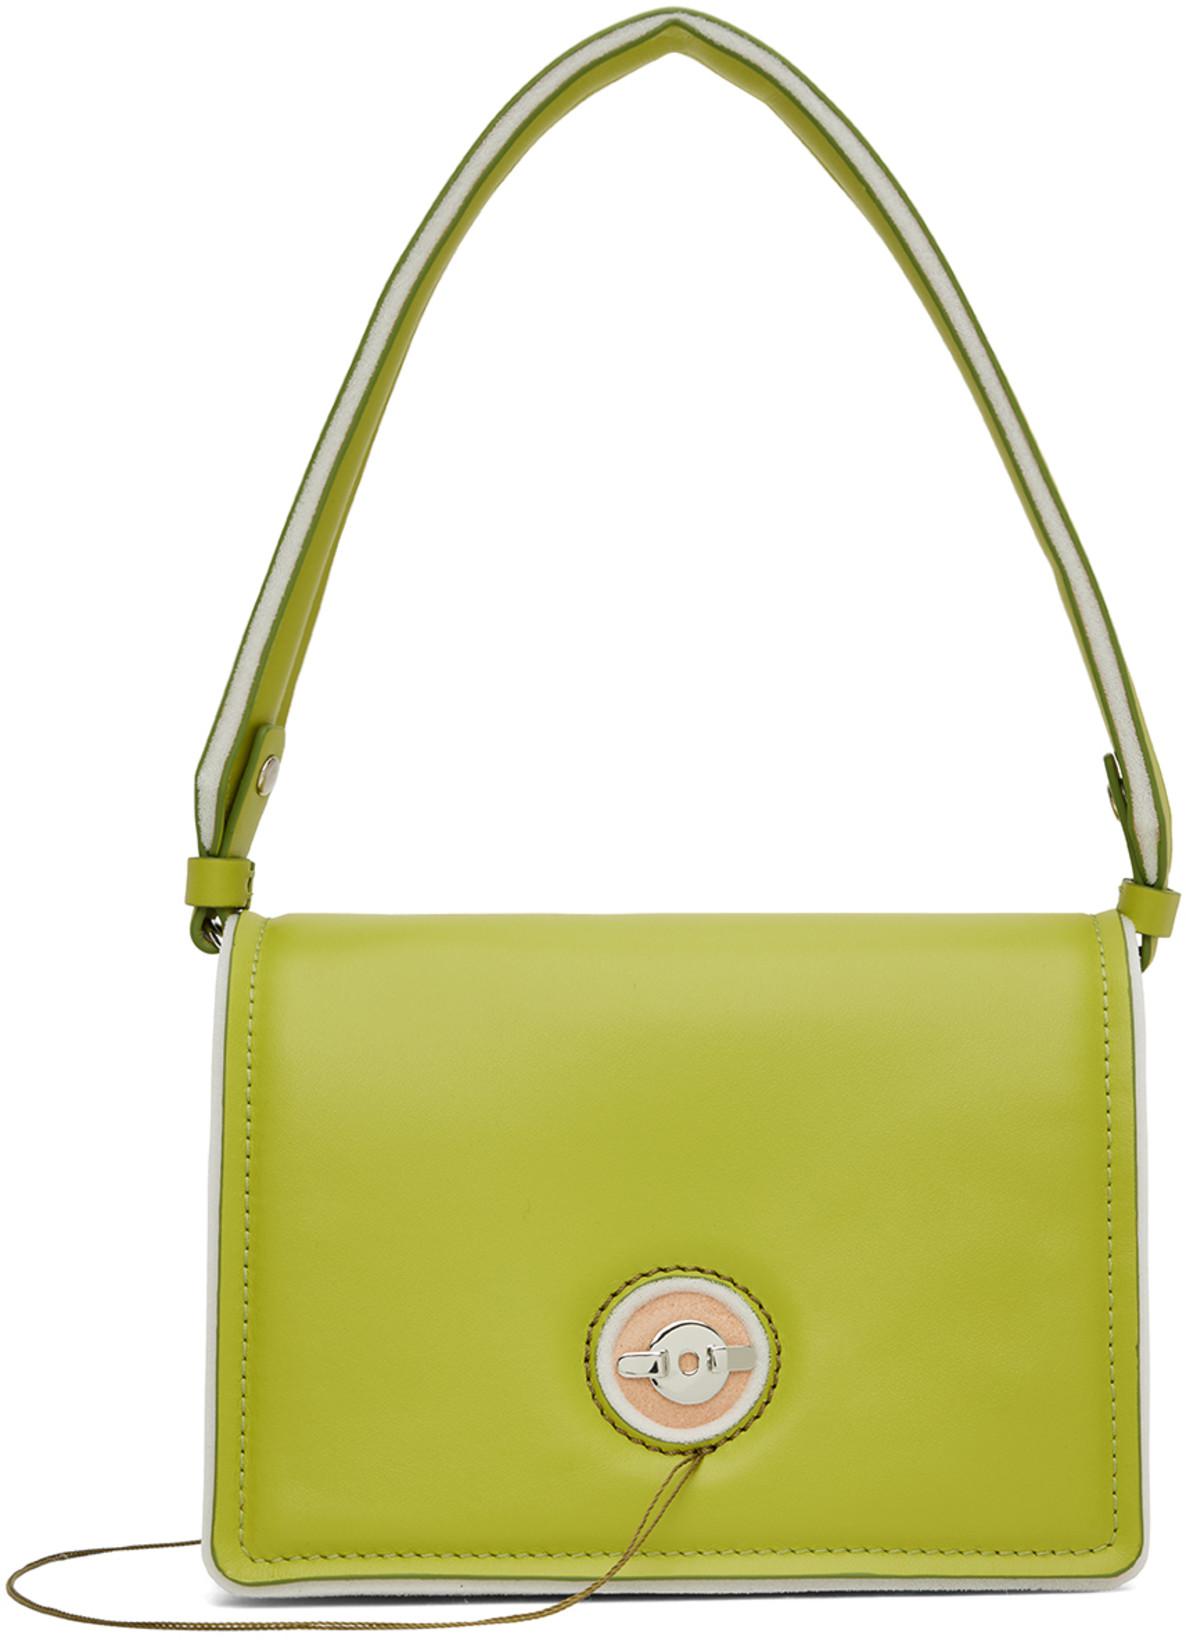 SSENSE Exclusive Green Mirim Bag by DENTRO